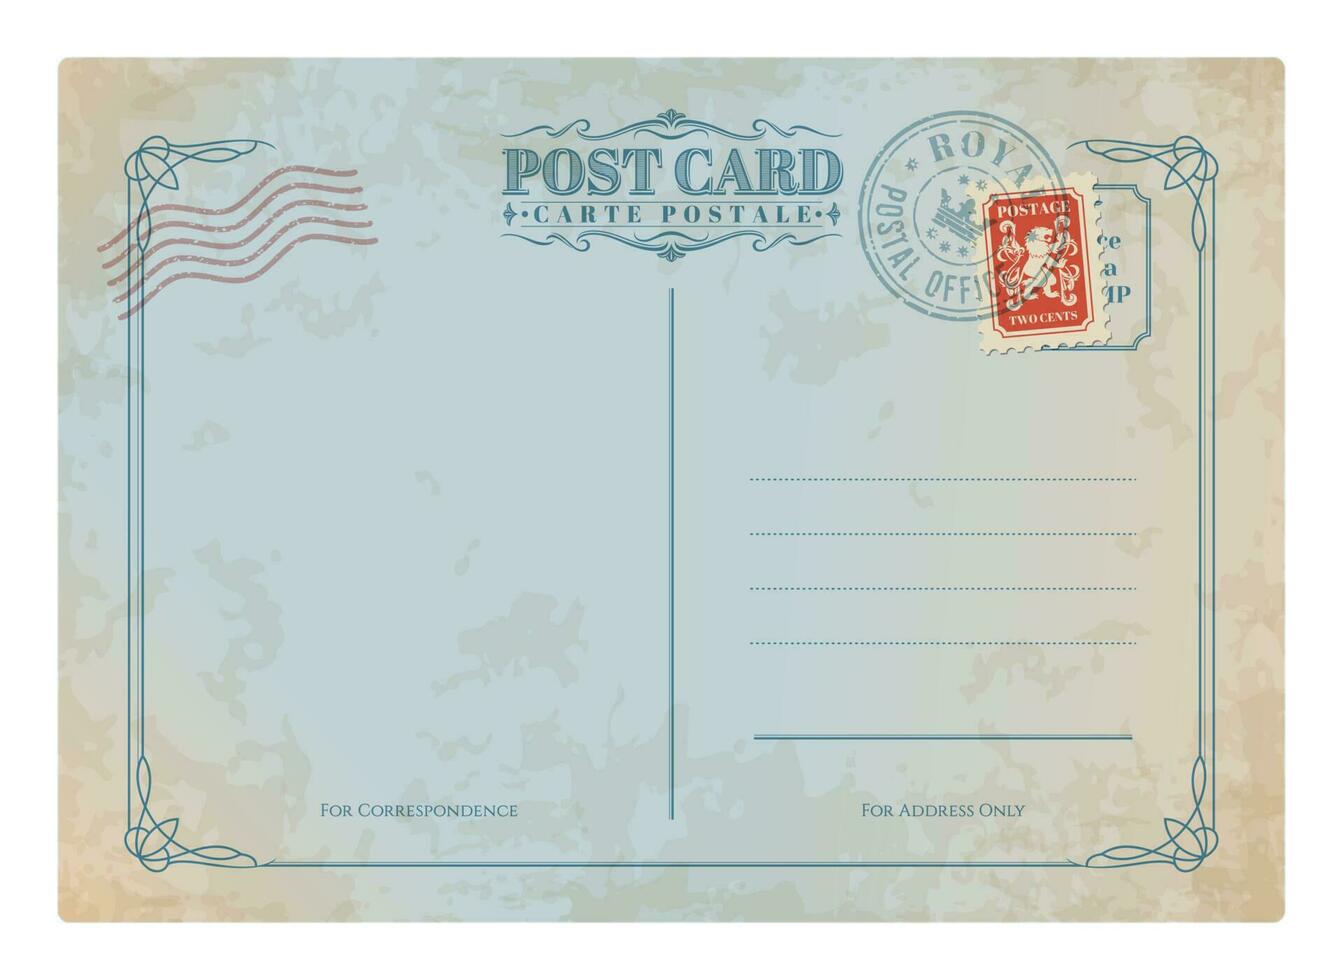 Mail vintage postcard, retro postage stamp vector